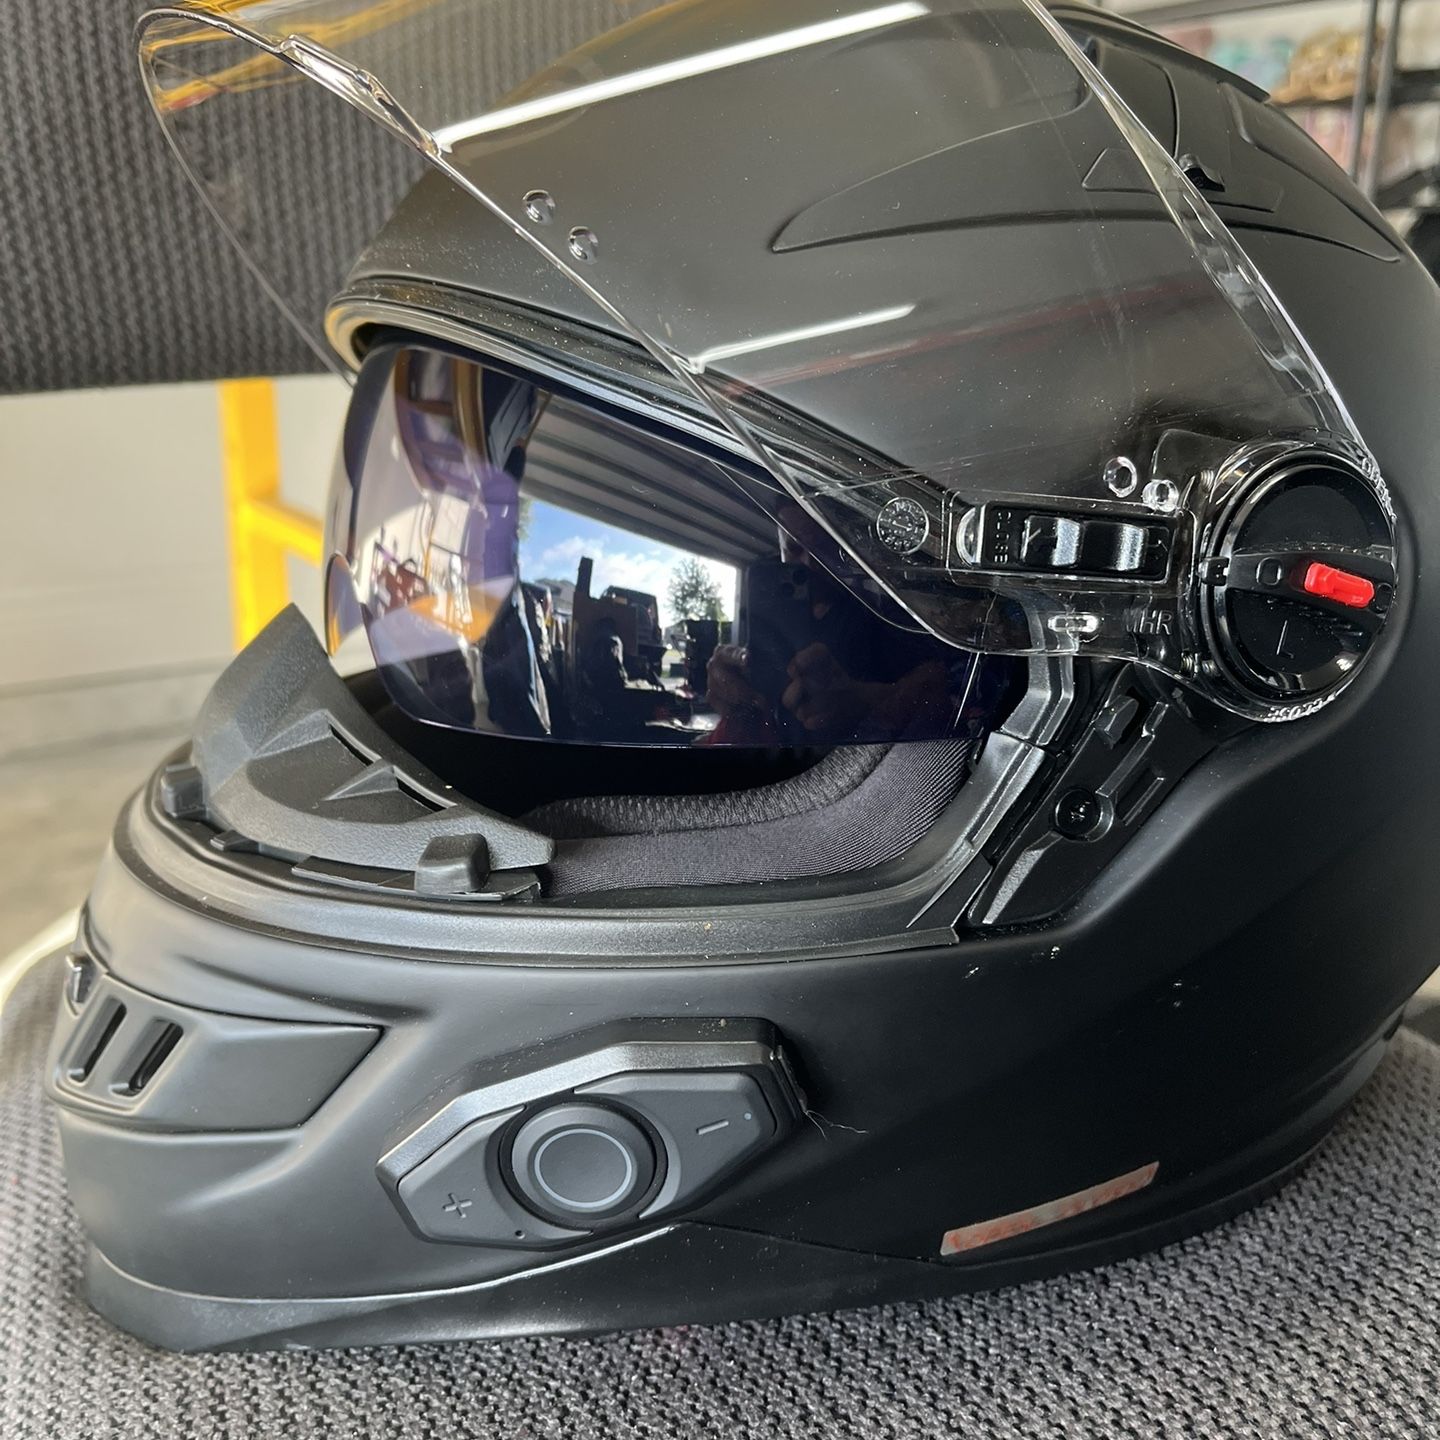 Bilt Techno 2.0 Sena Bluetooth Helmet